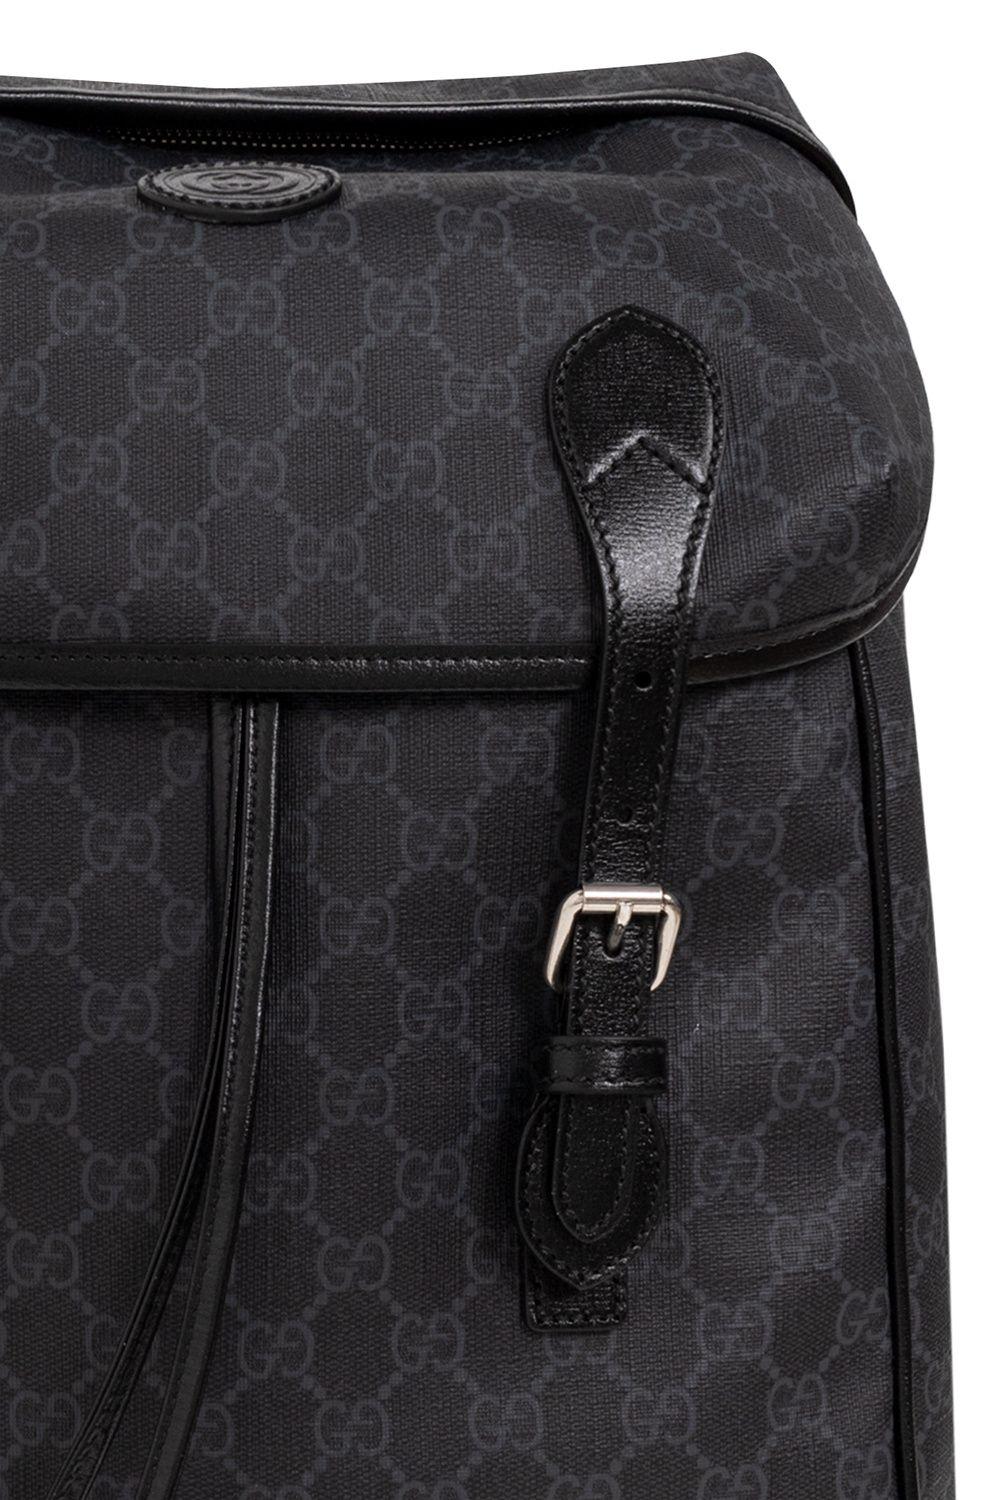 Gucci GG Supreme Pattern Backpack - Farfetch  Mens bags fashion, Bags, Mens  backpack fashion